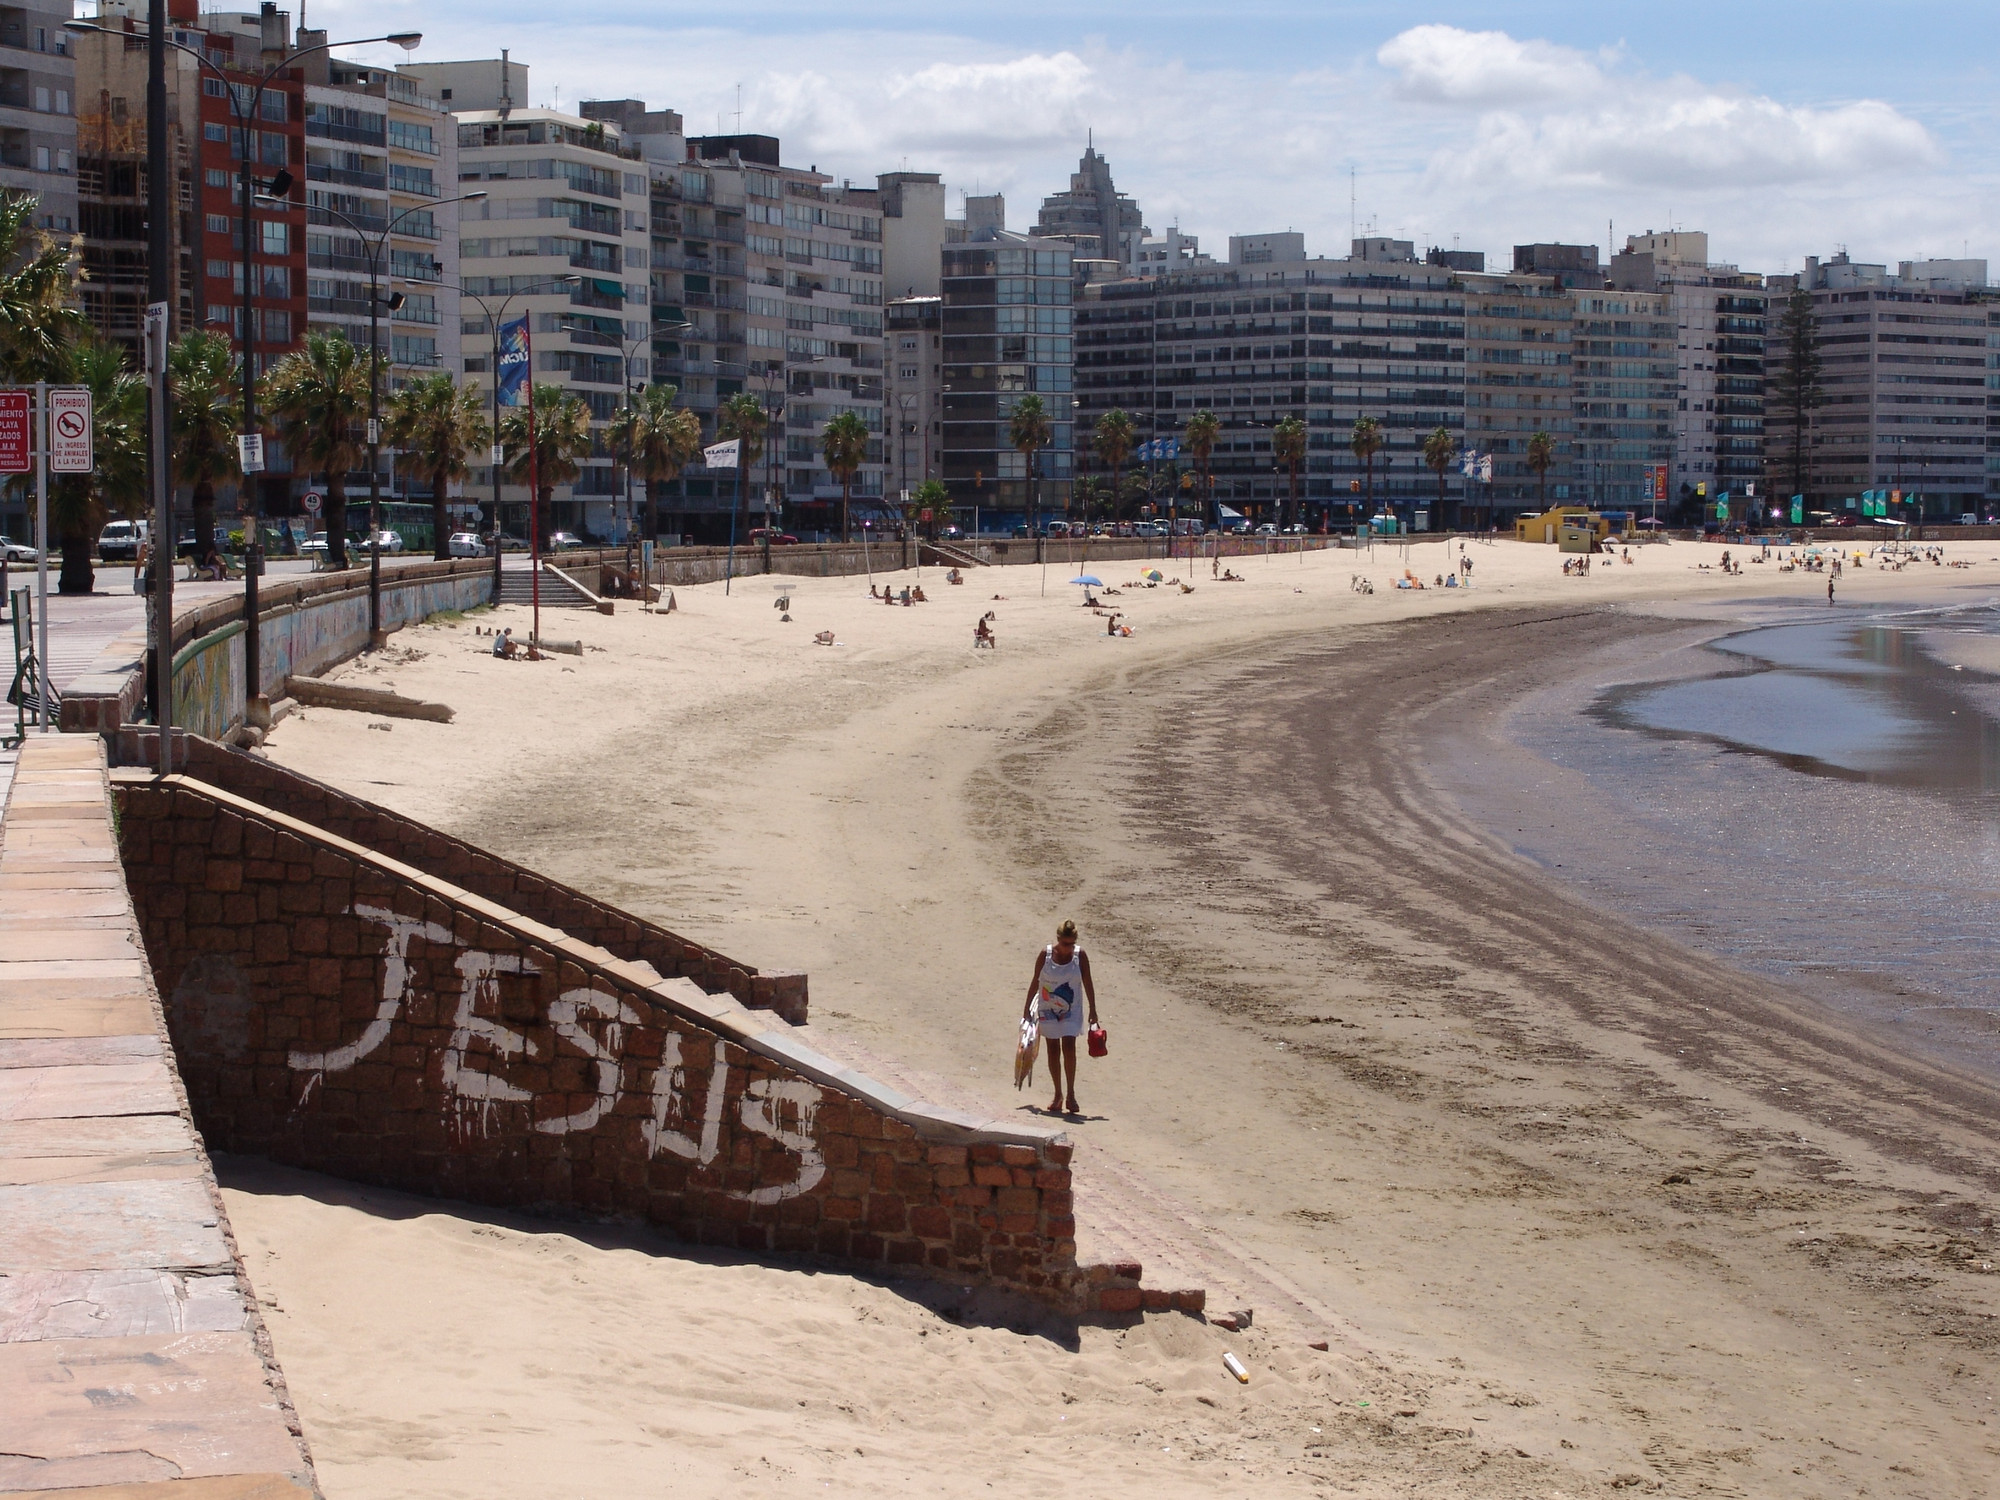 Strand van Montevideo in Uruguay, trap met het woord 'Jesus' in graffiti.